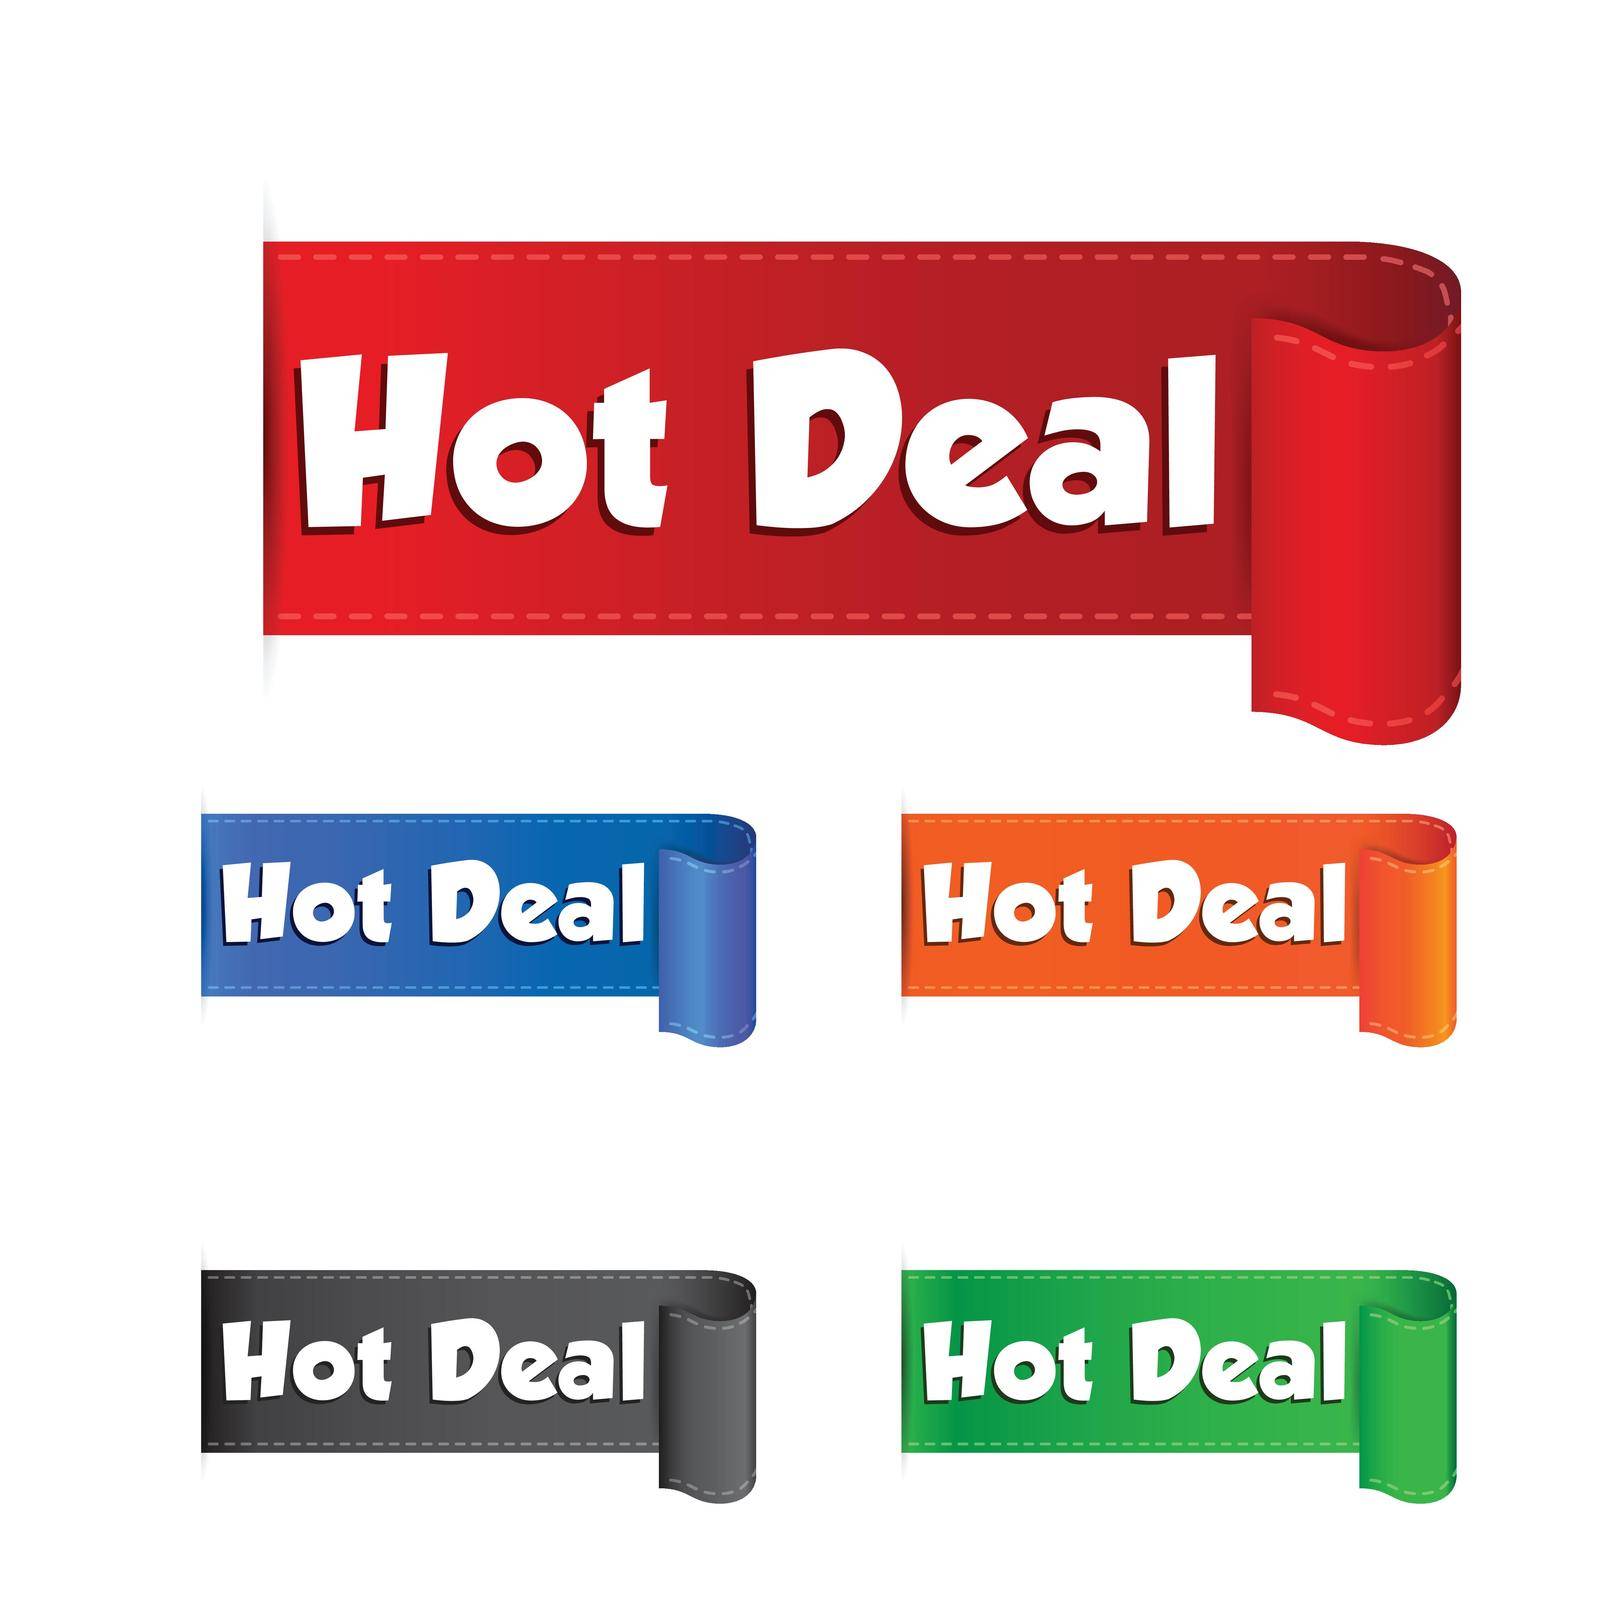 Hot deal sticker. Label vector illustration on white background